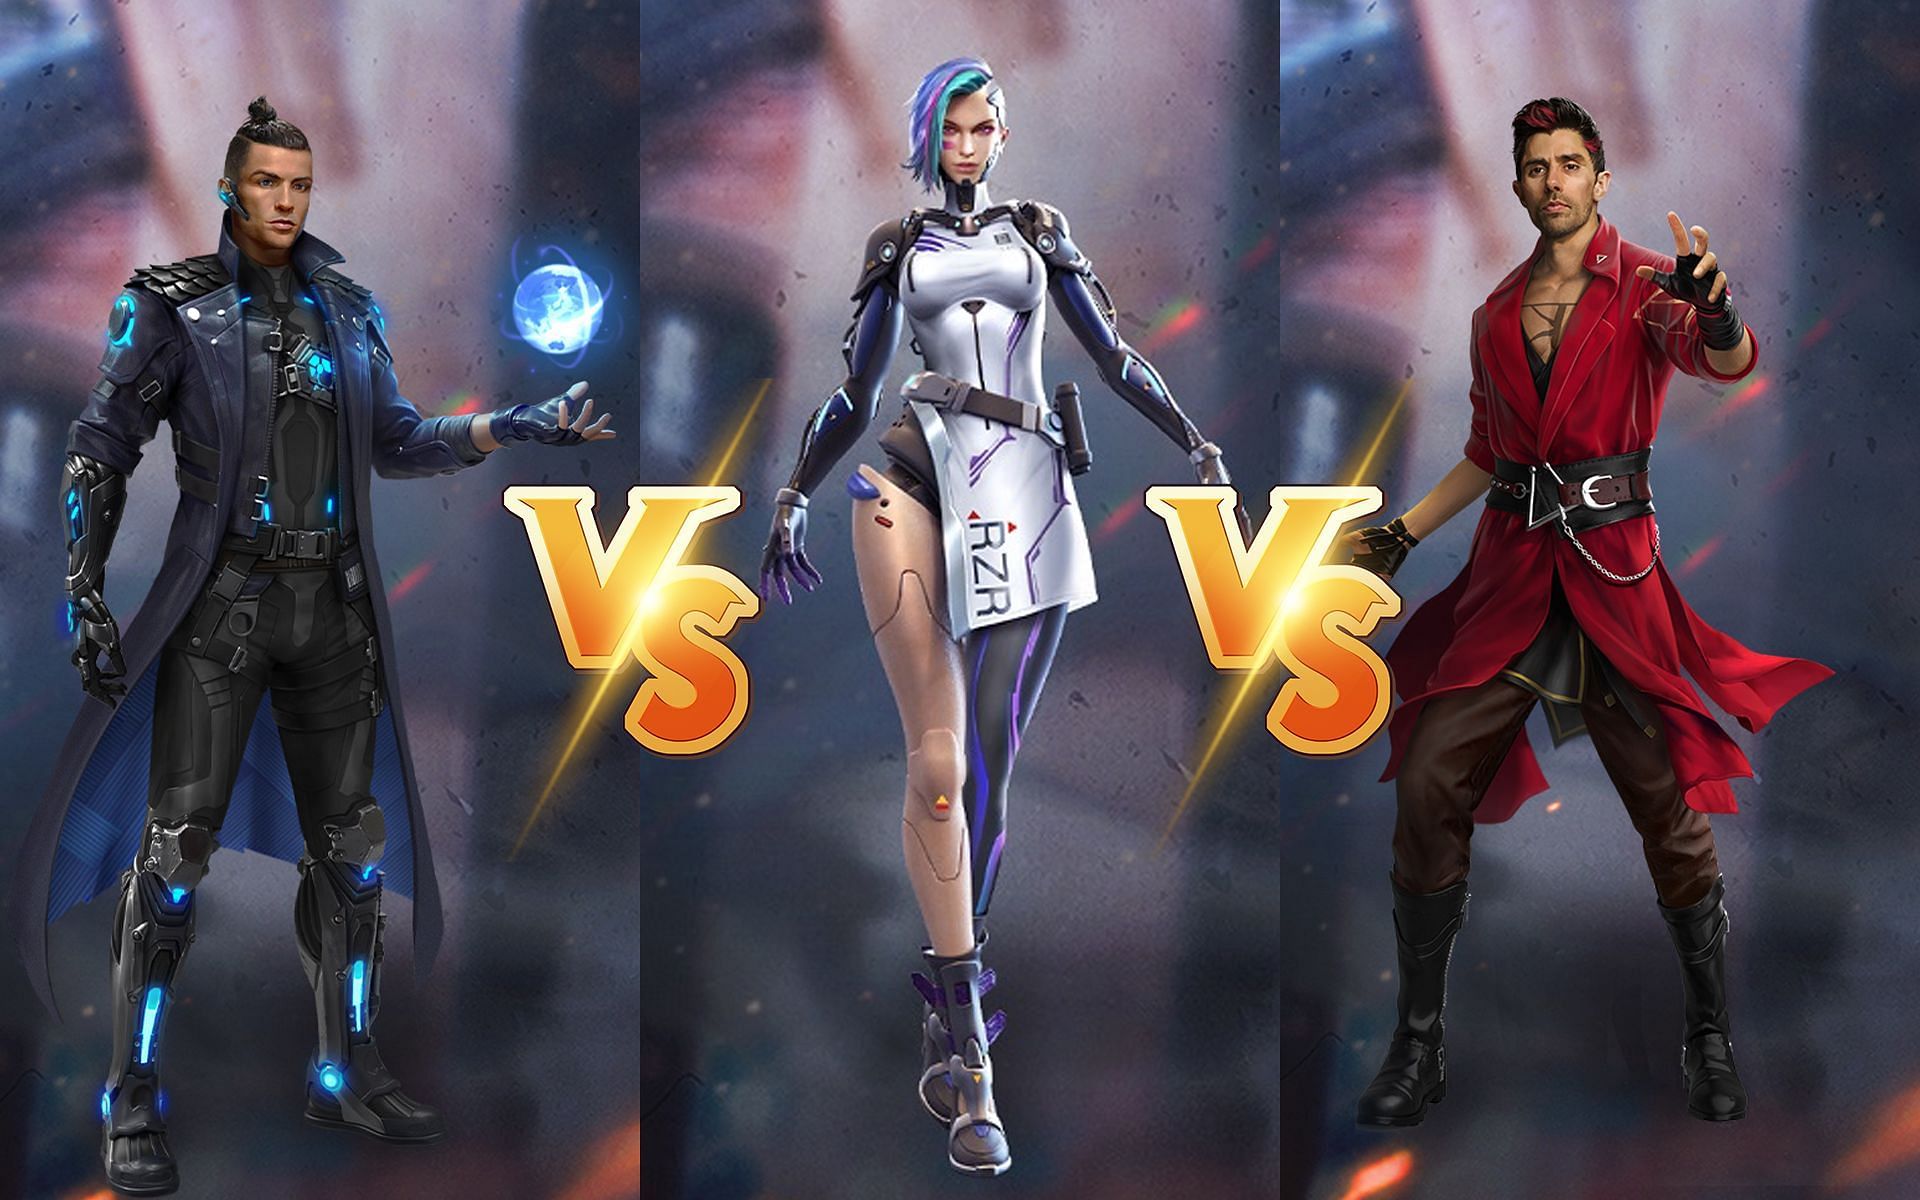 Chrono vs A124 vs K: Who is more suitable for Battle Royale matches? (Image via Sportskeeda)